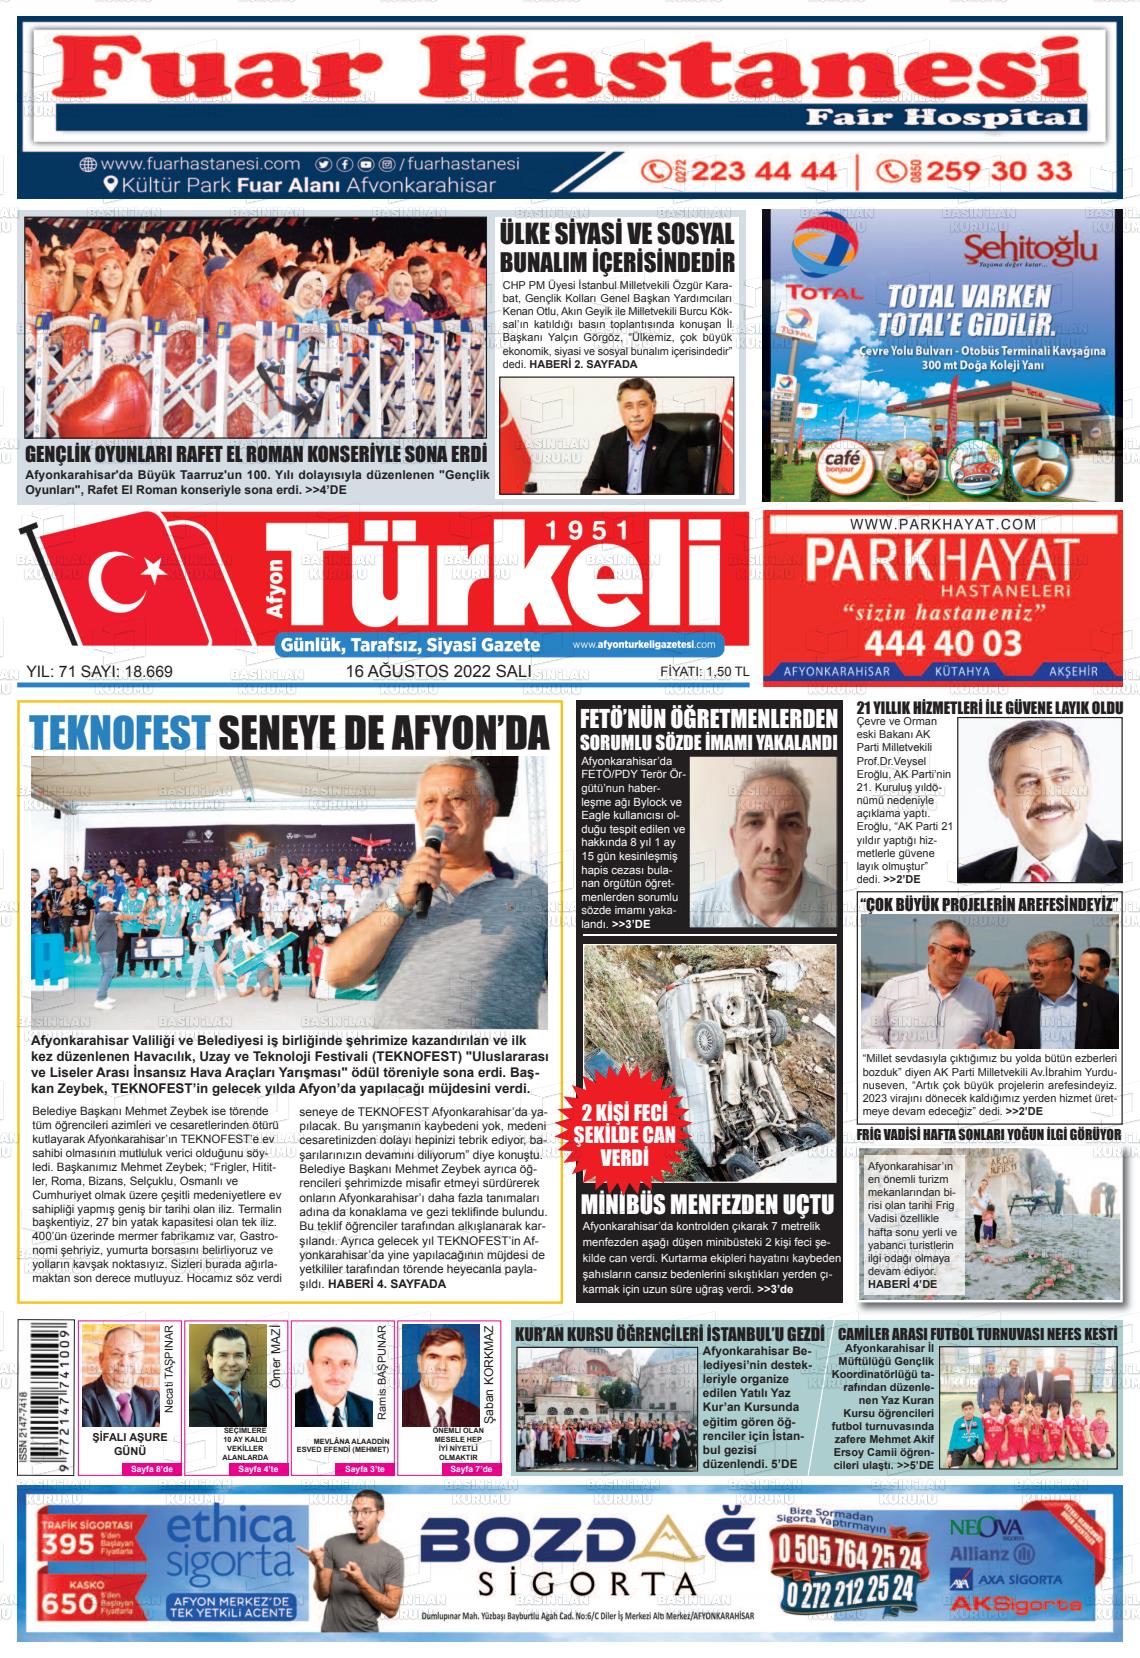 16 Ağustos 2022 Afyon Türkeli Gazete Manşeti